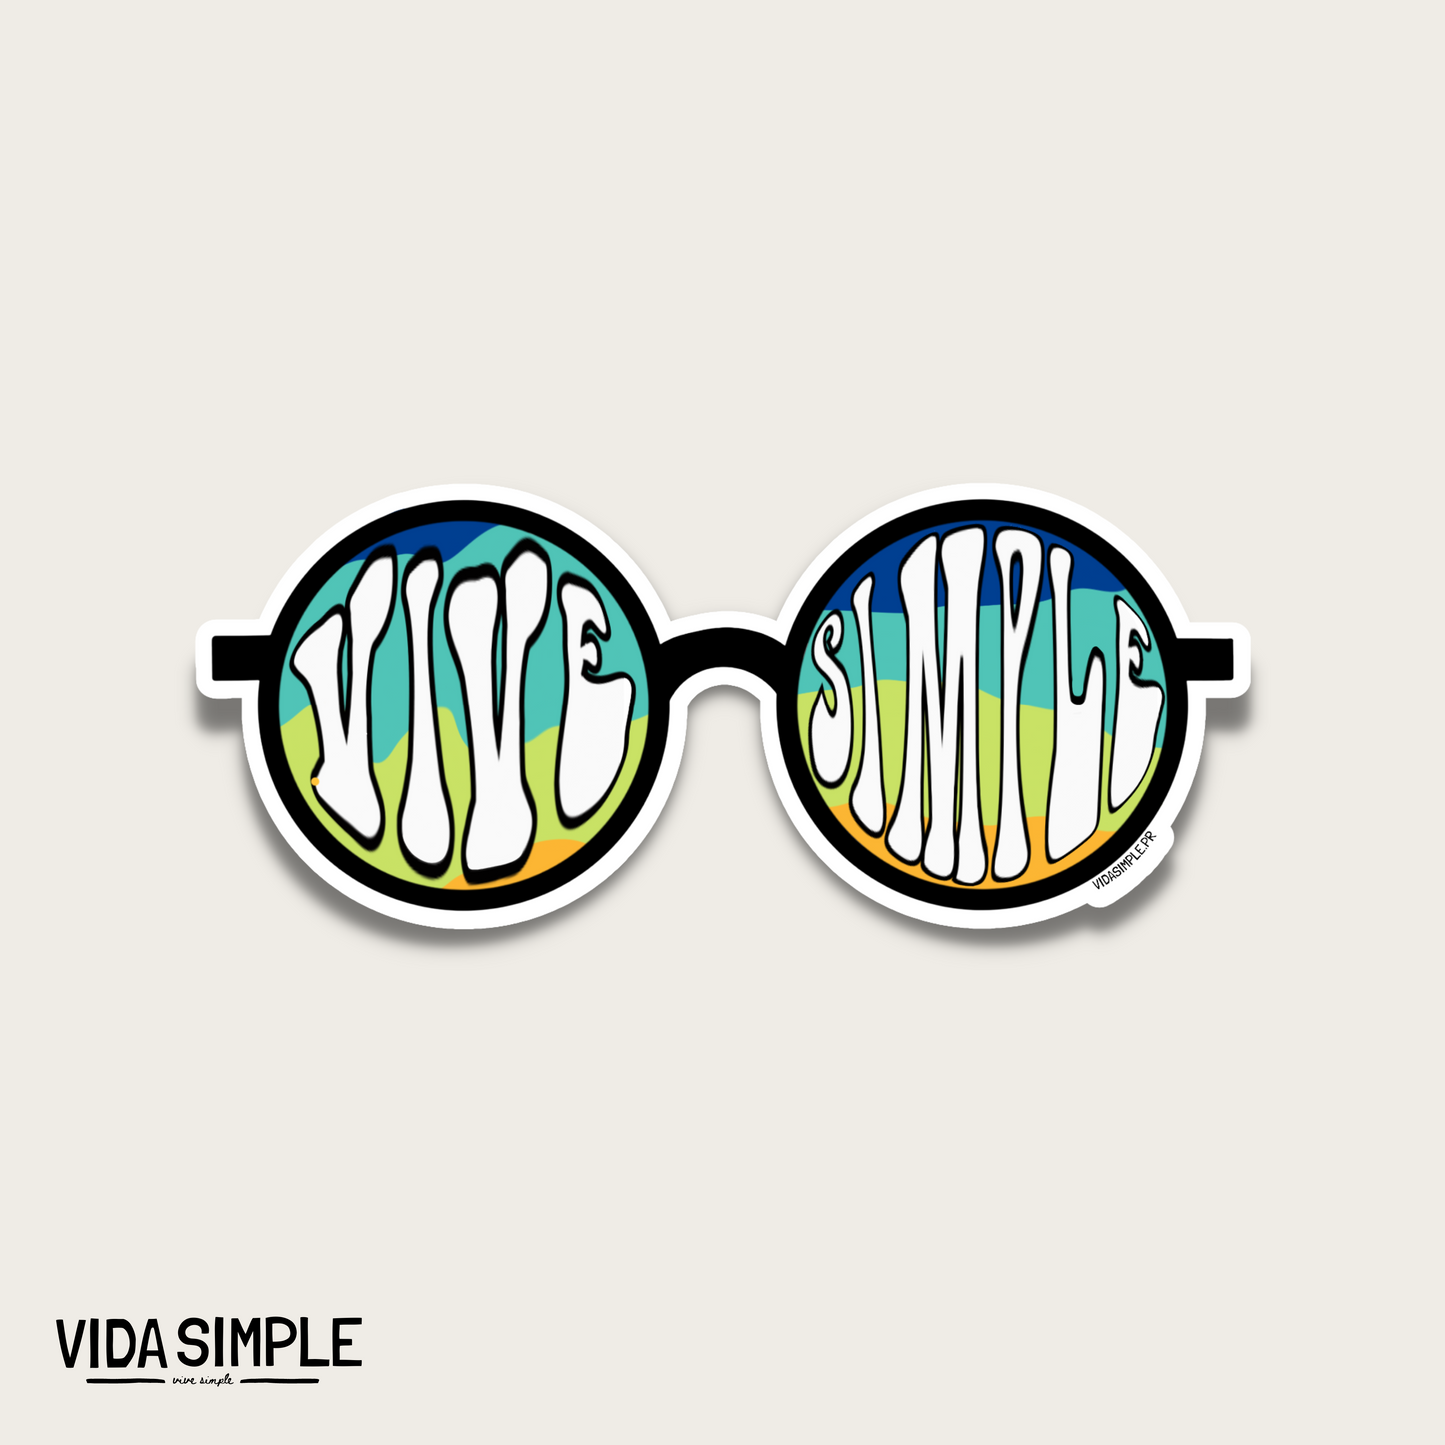 Gafas "Vive Simple"